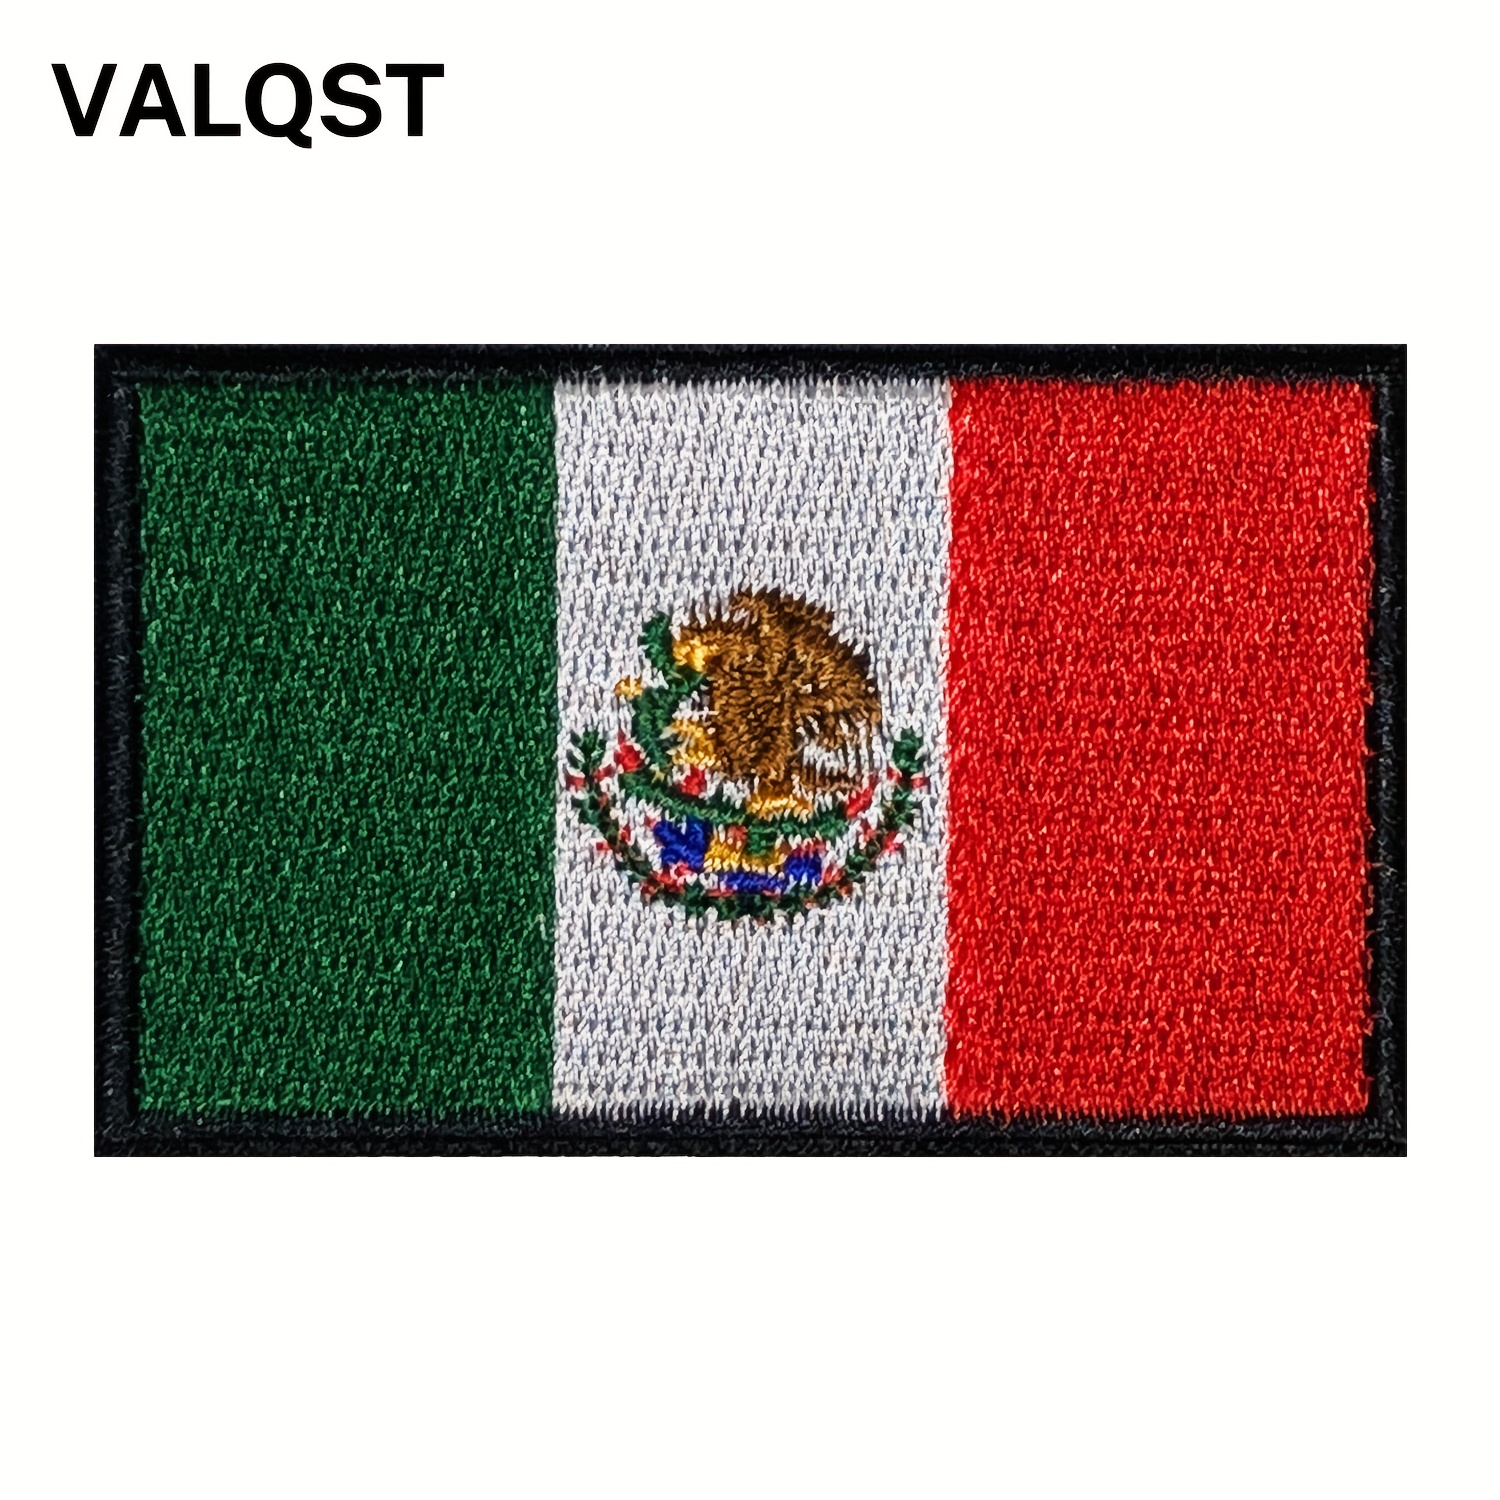 MEXICO FLAG-HELLO KITTY- STICKER DECAL,HELLO KITTY MEXICANA